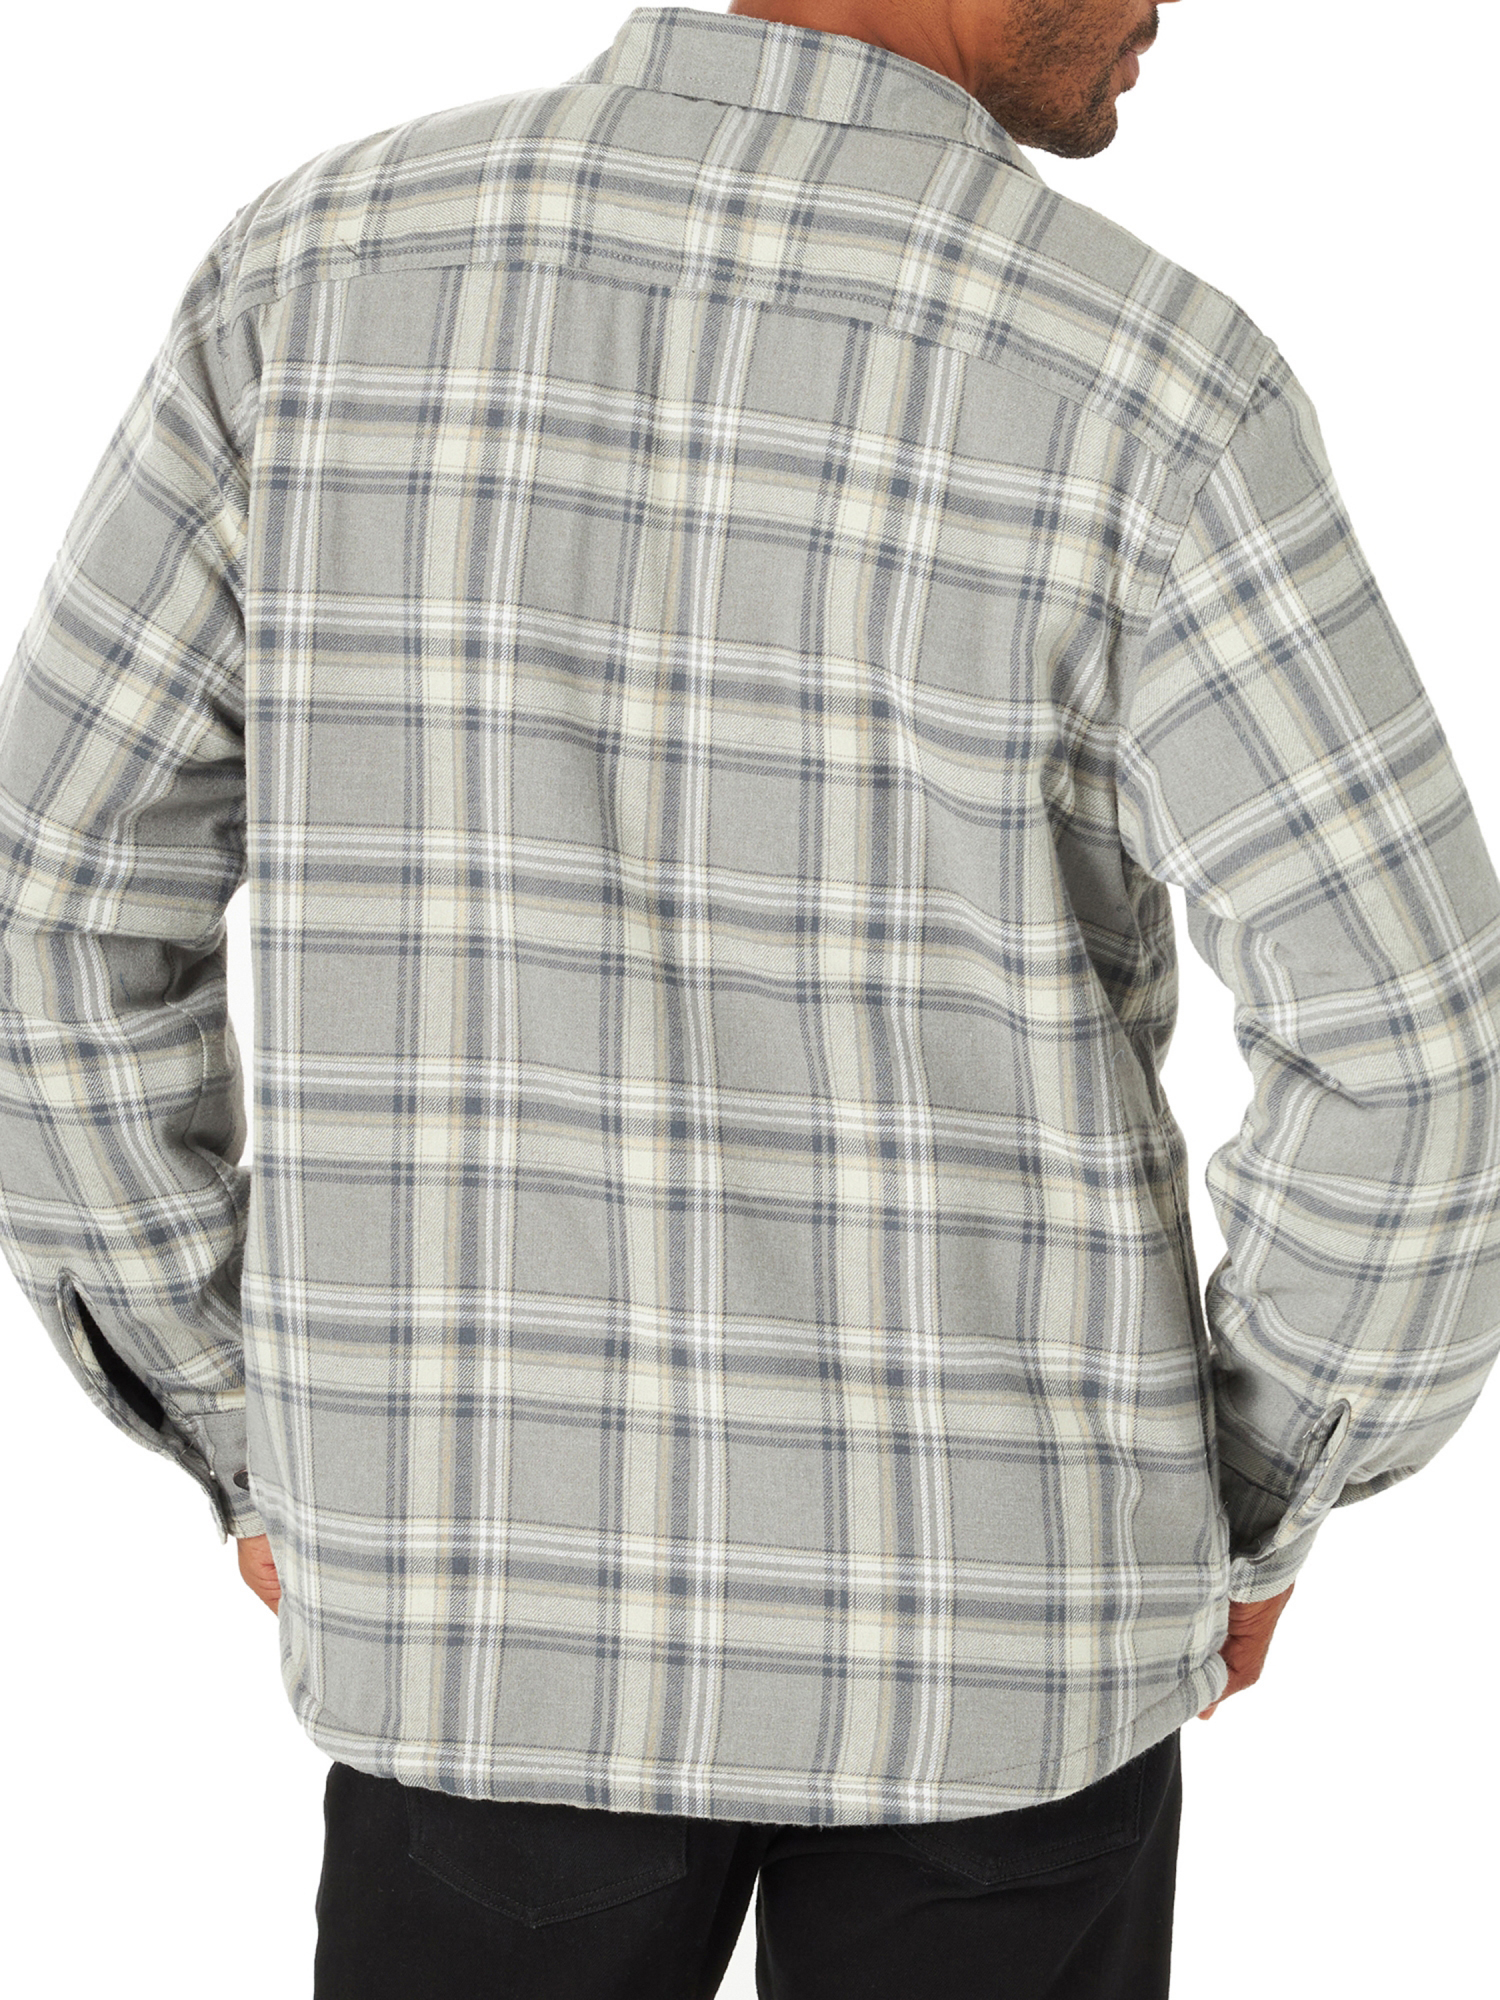 Wrangler Men's Heavyweight Sherpa-Lined Shirt Jacket - image 2 of 5